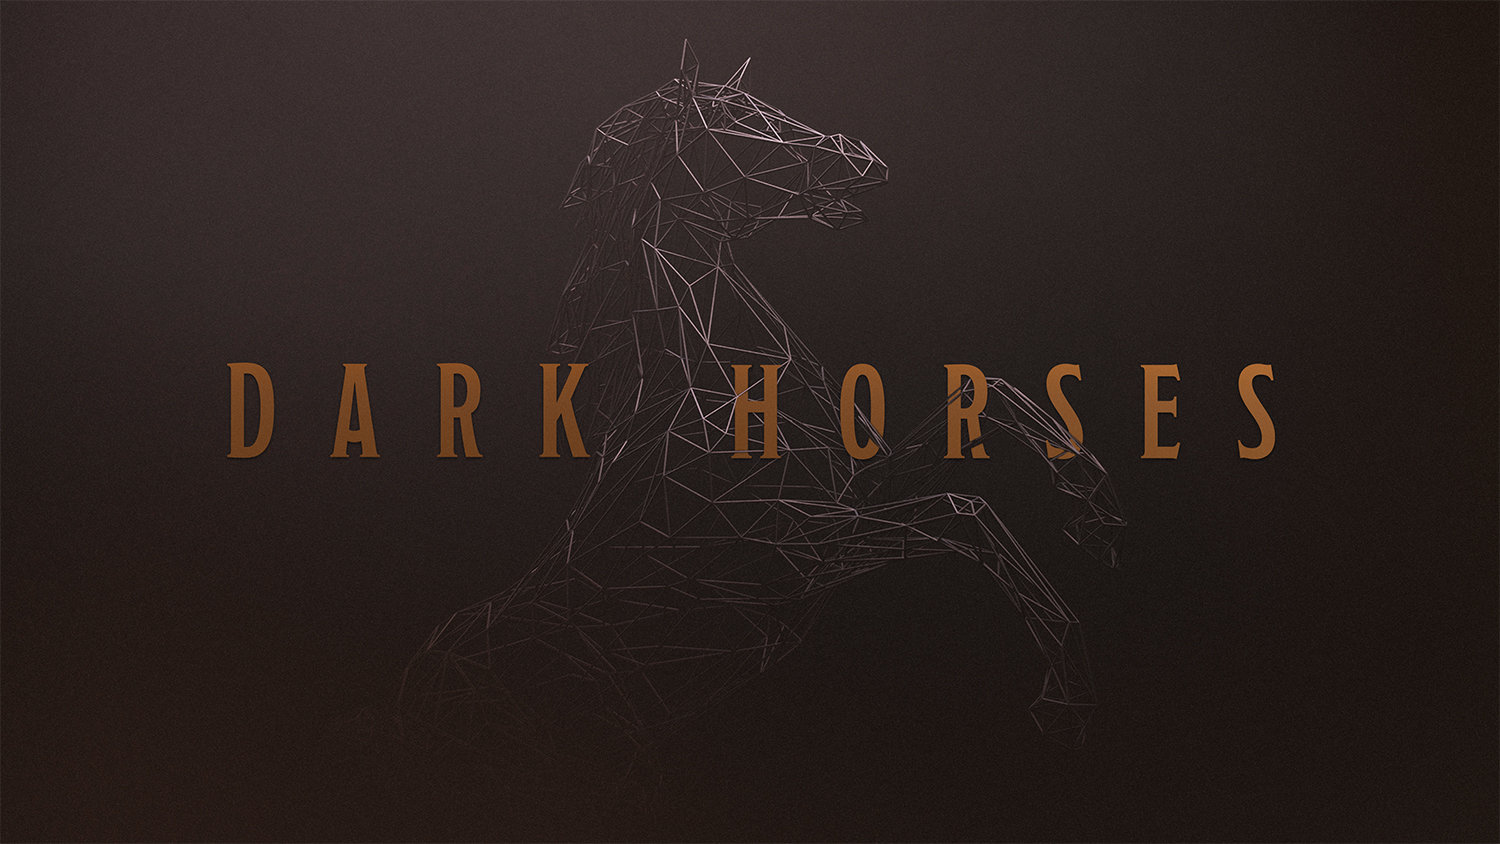 Dark Horses